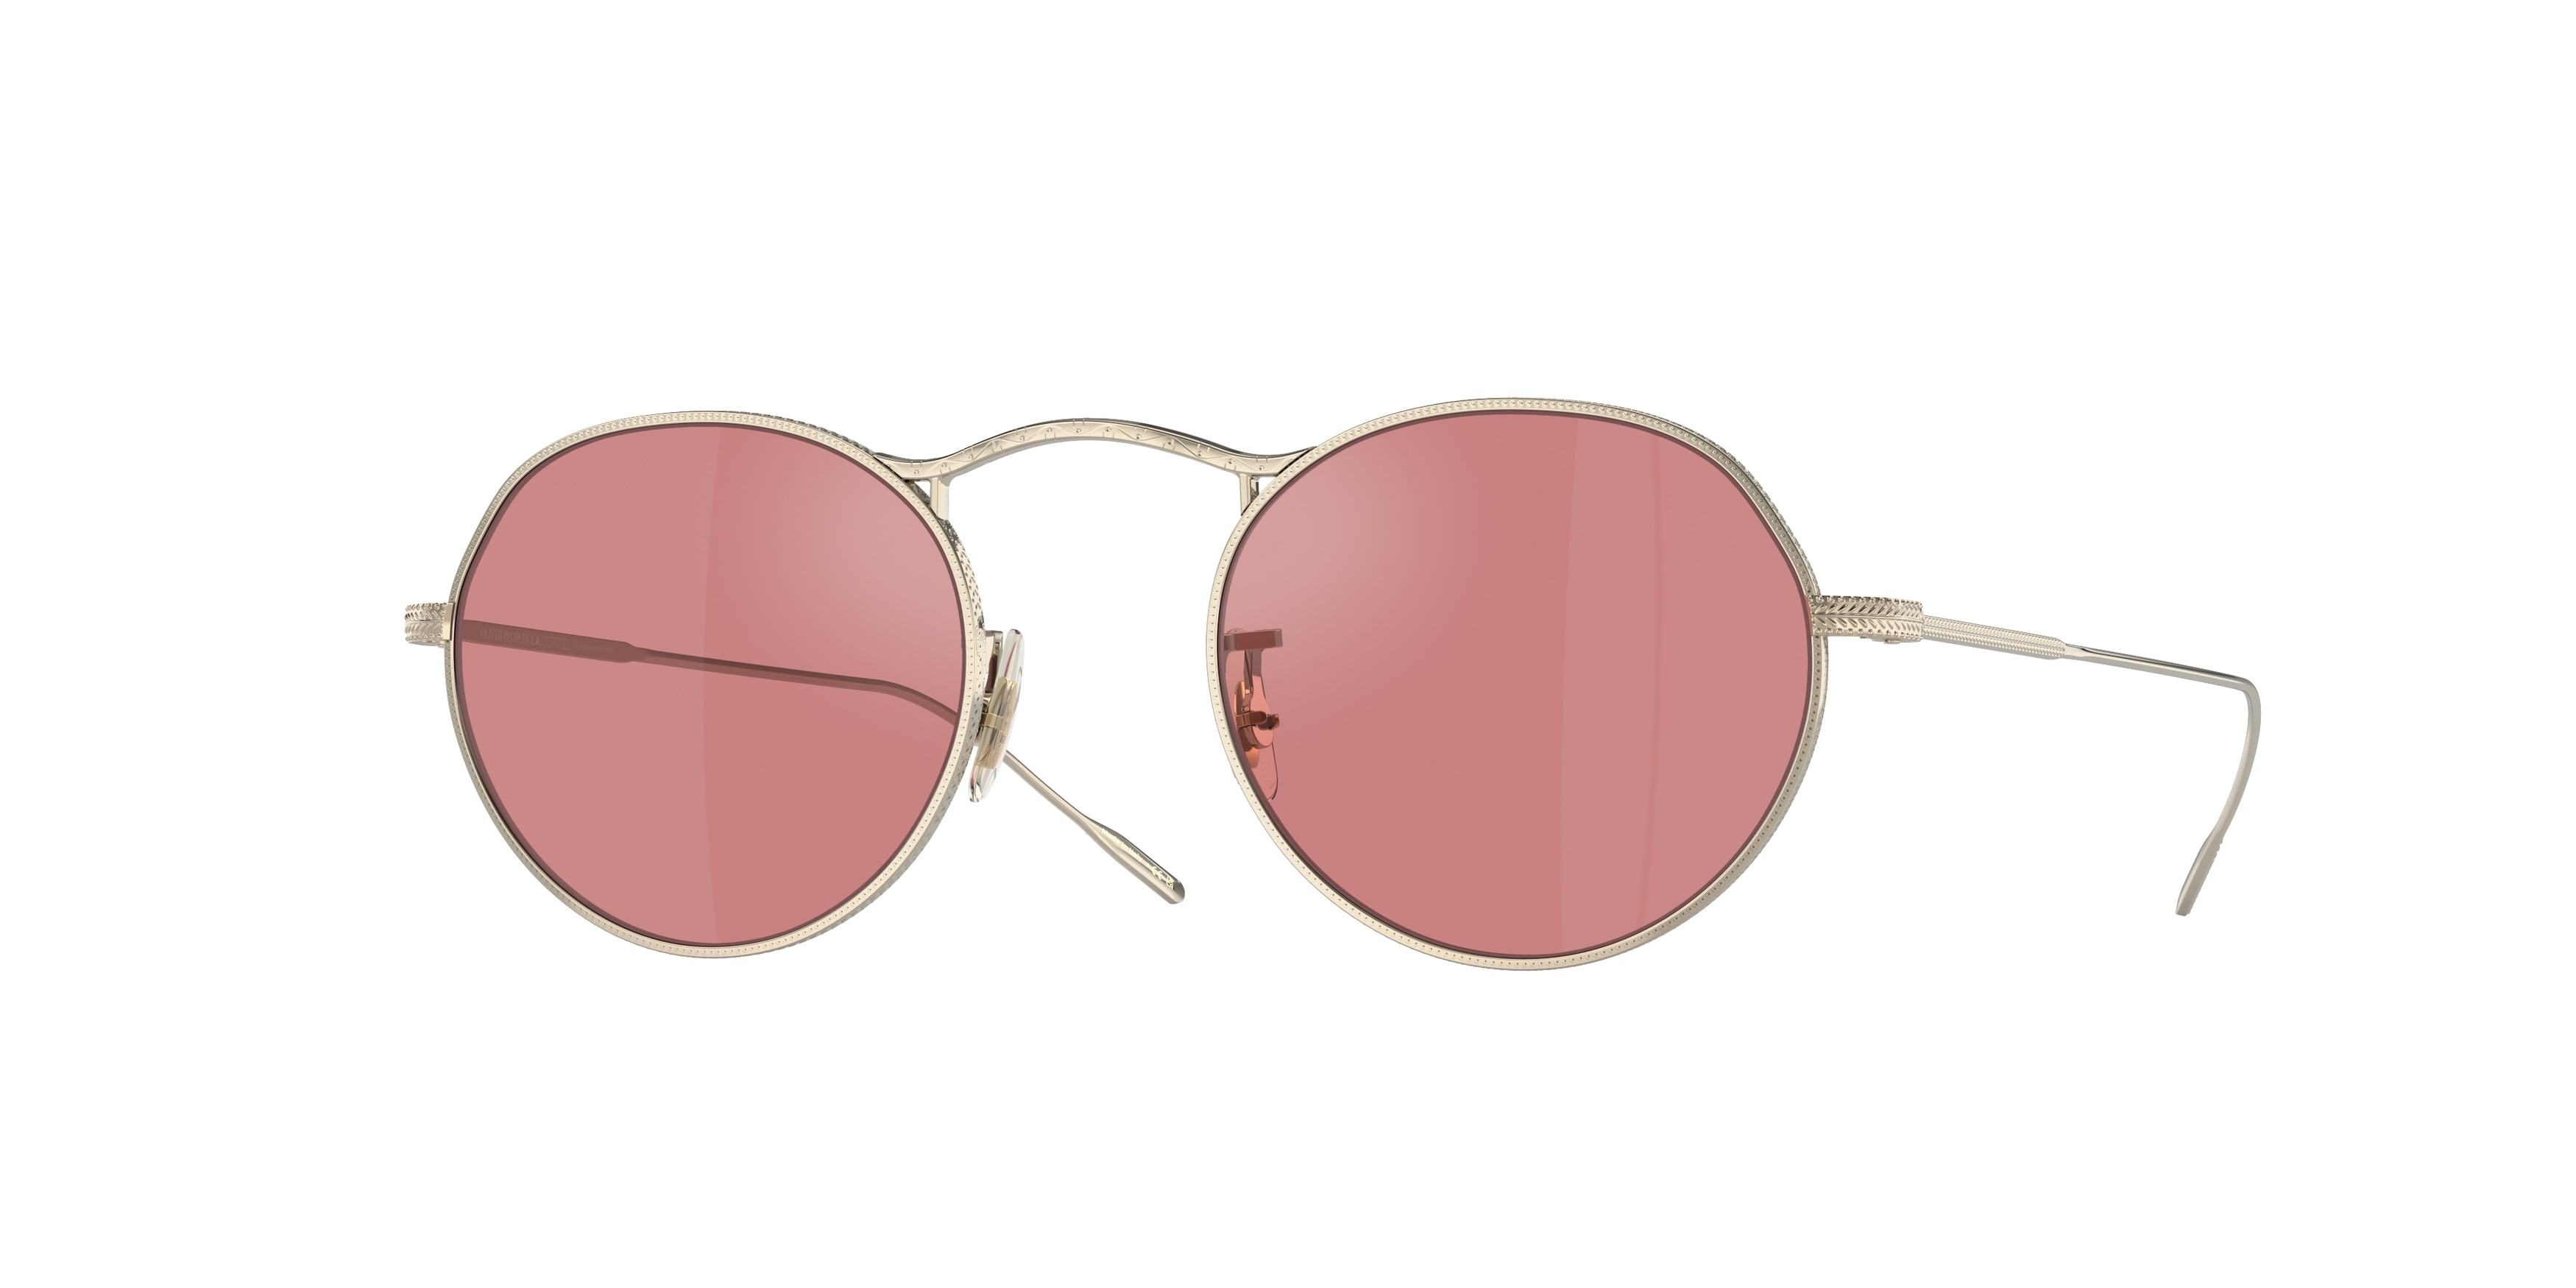 Oliver Sunglasses, Shop Sunglasses Online